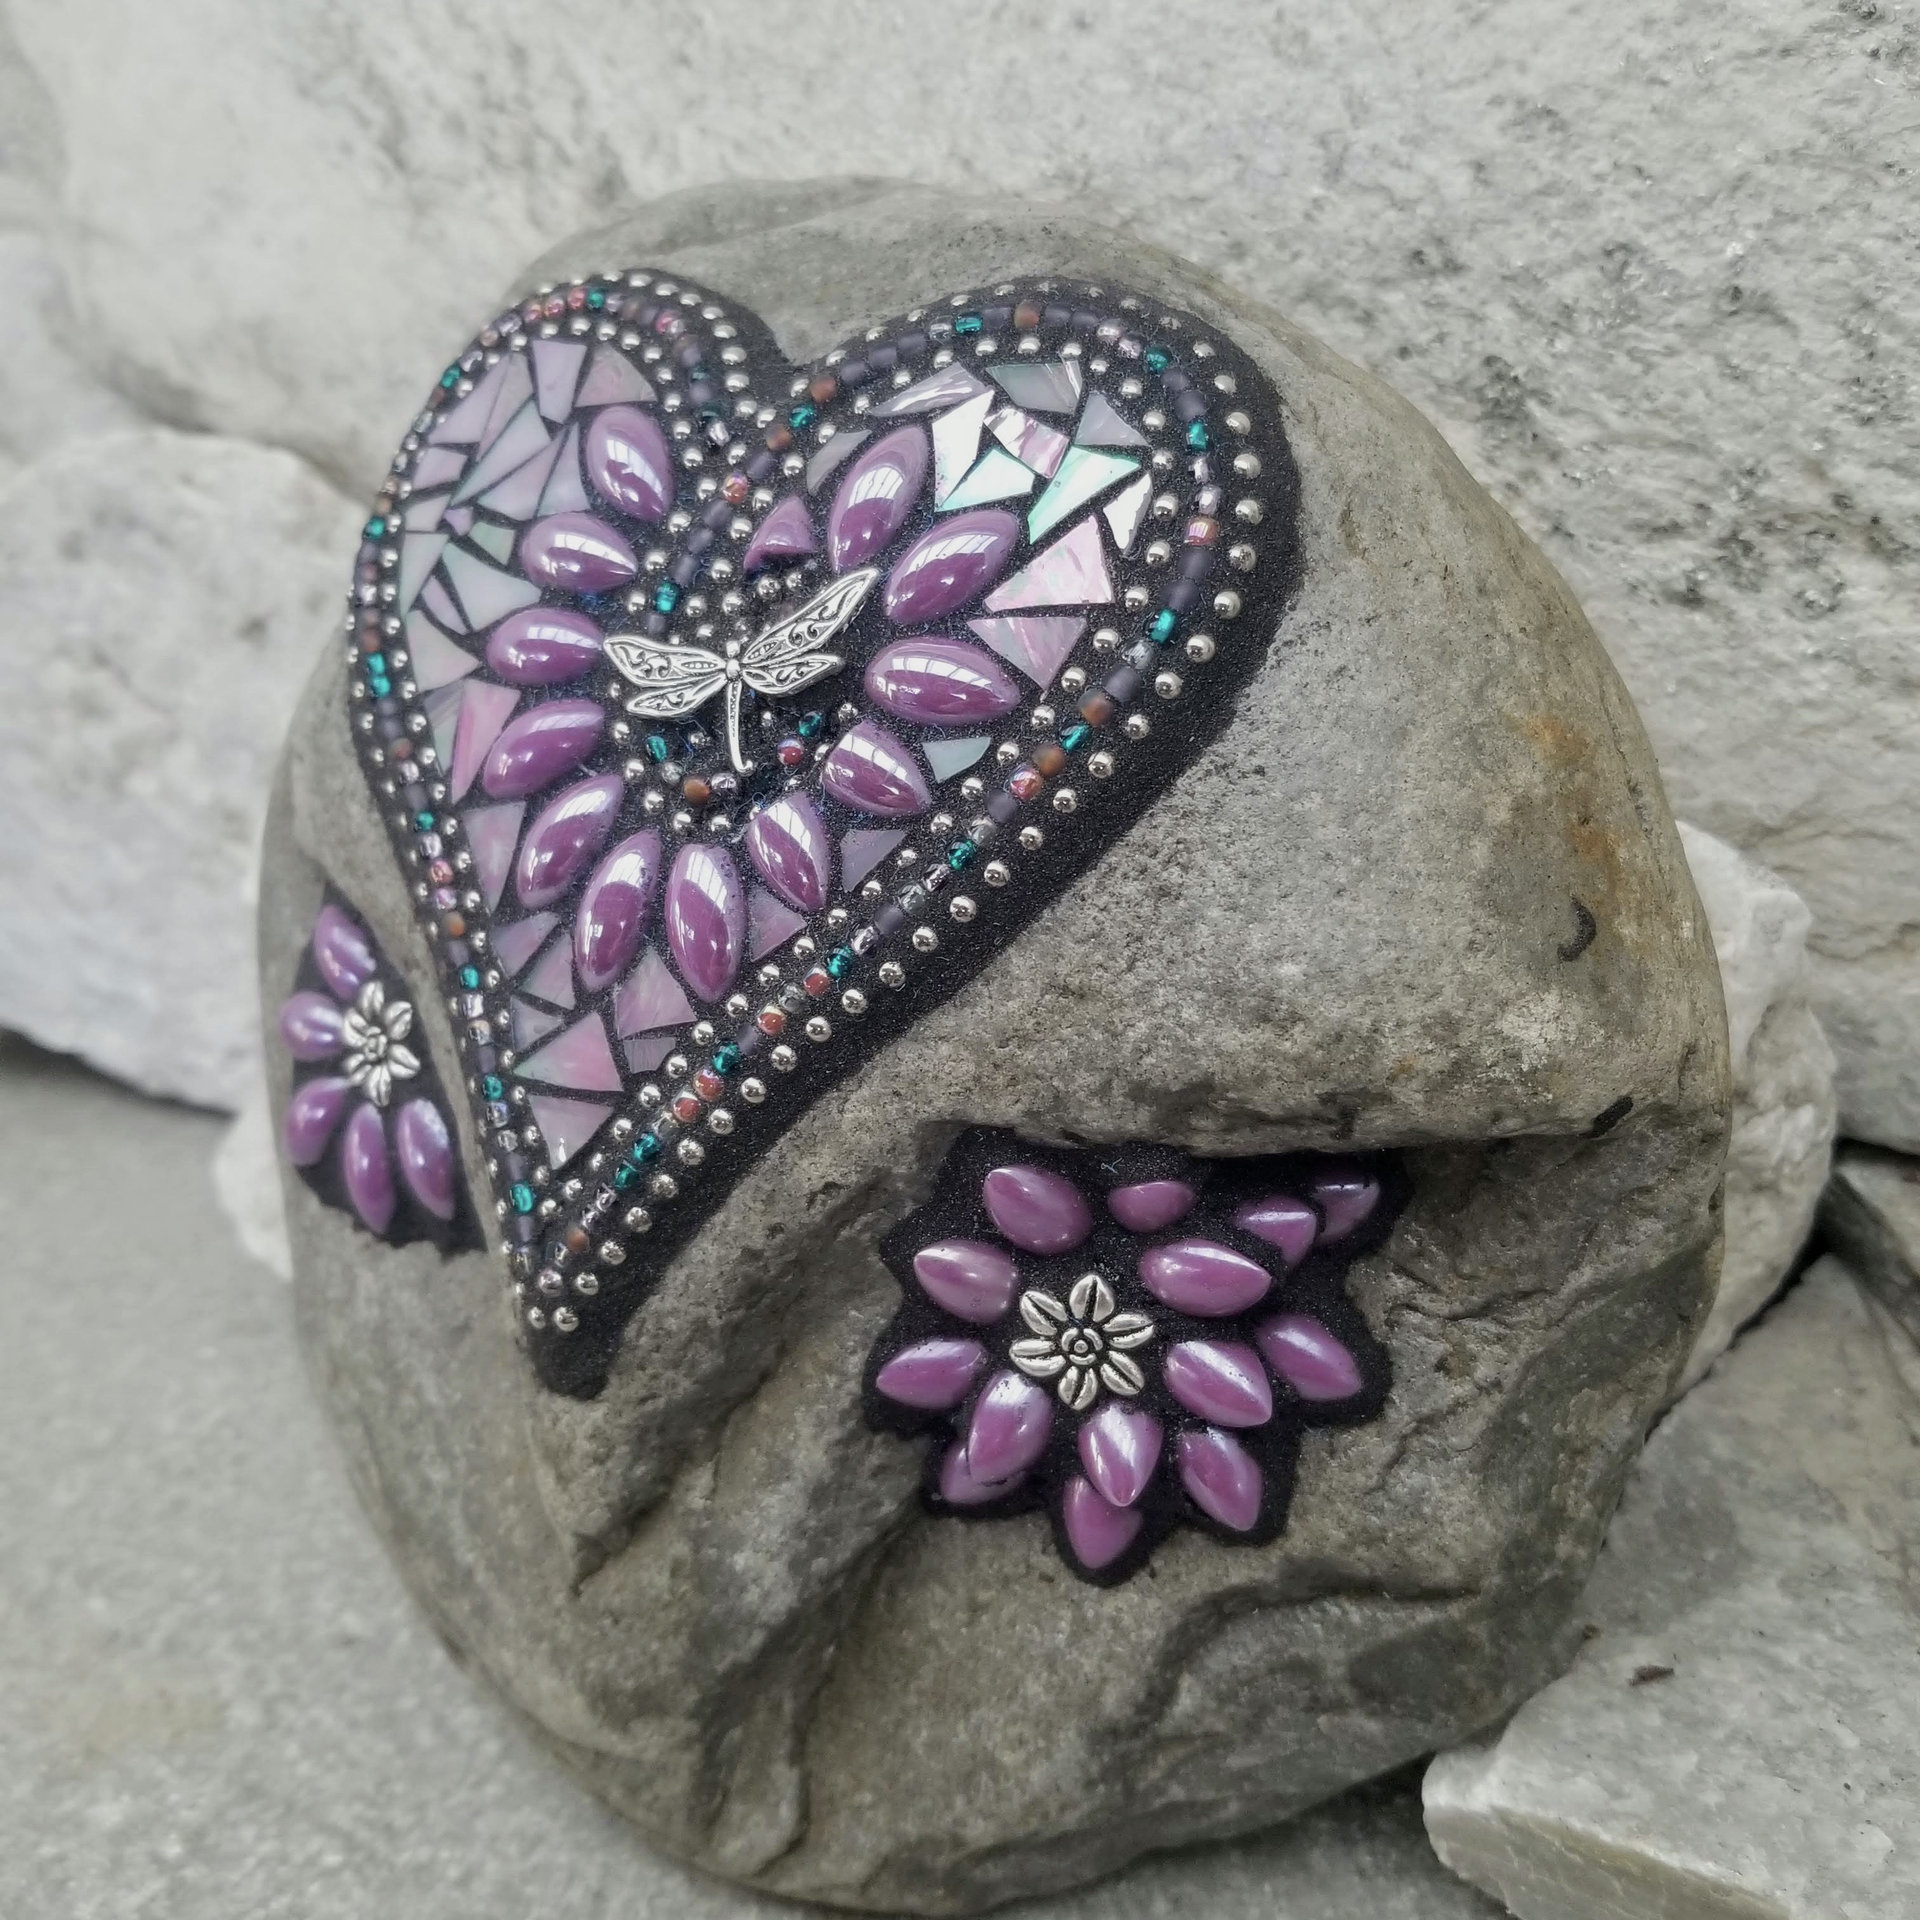 Iridescent Lavender Heart with Dragonfly, Garden Stone, Mosaic, Garden Decor